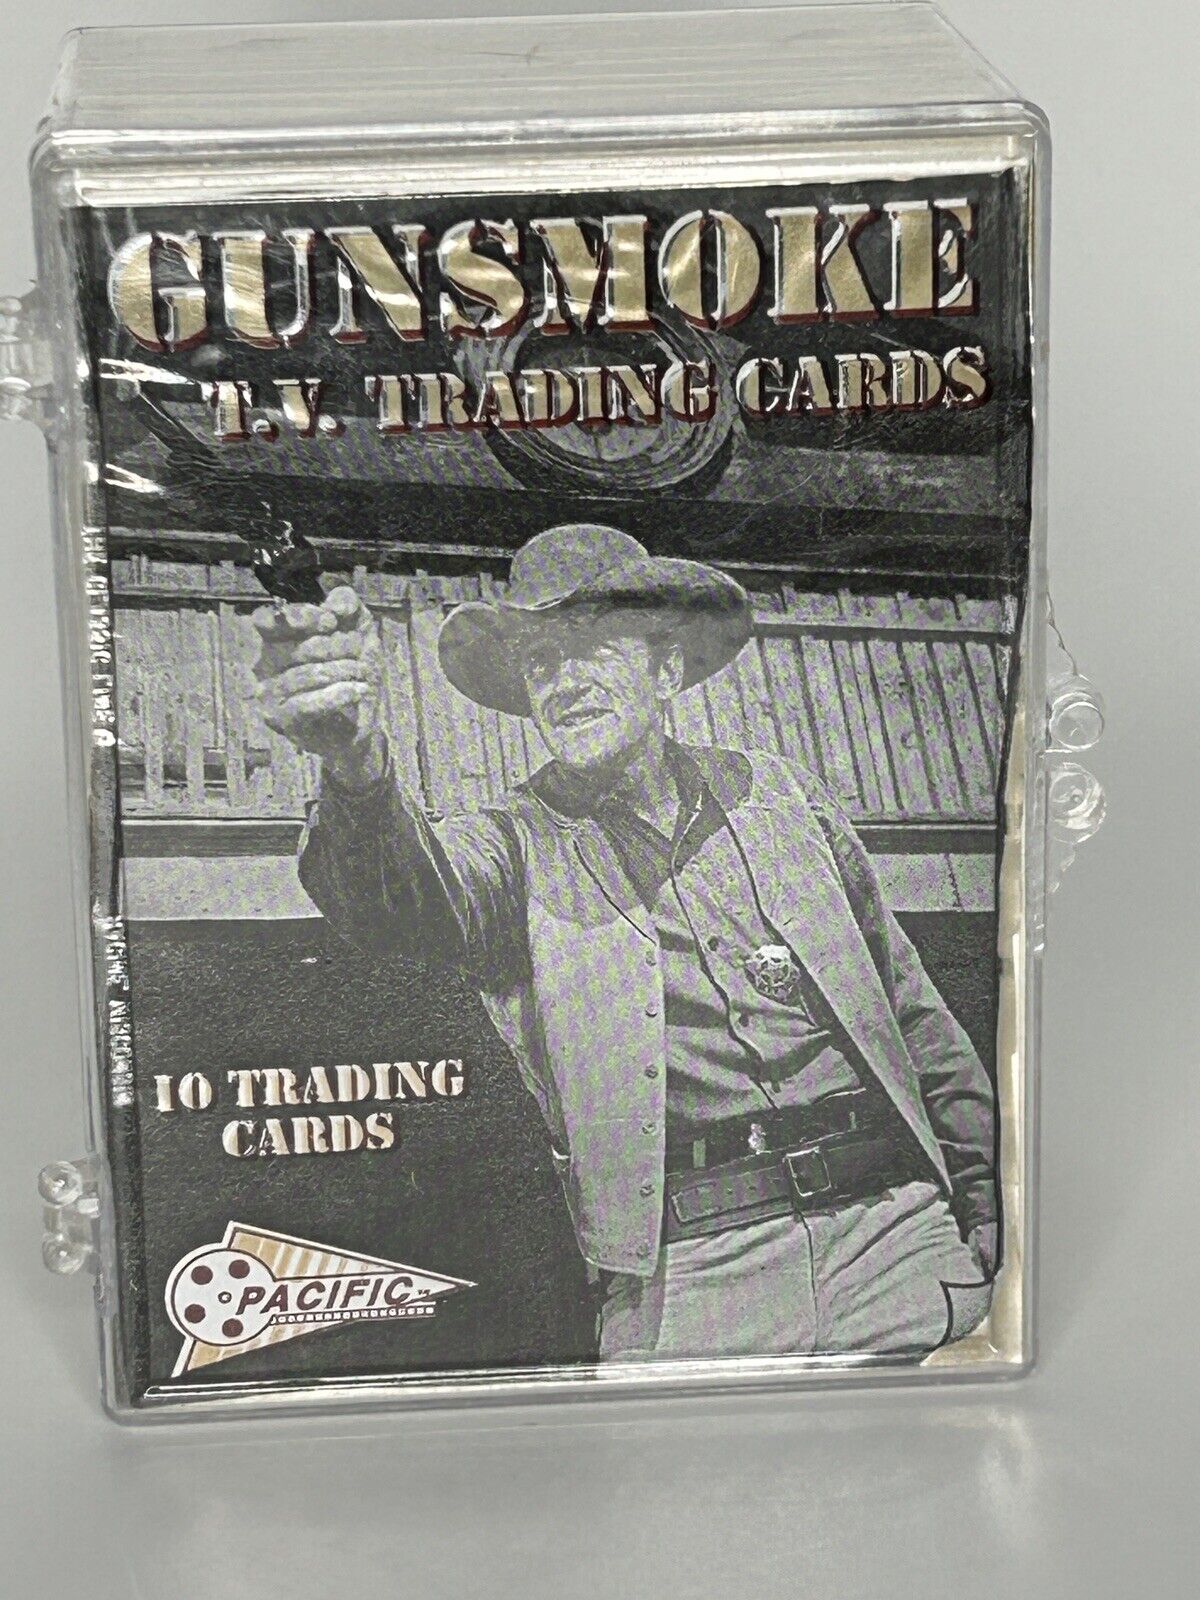 Gunsmoke T.V. Trading Card Base Set Vintage 1993 Pacific Trading Cards NM